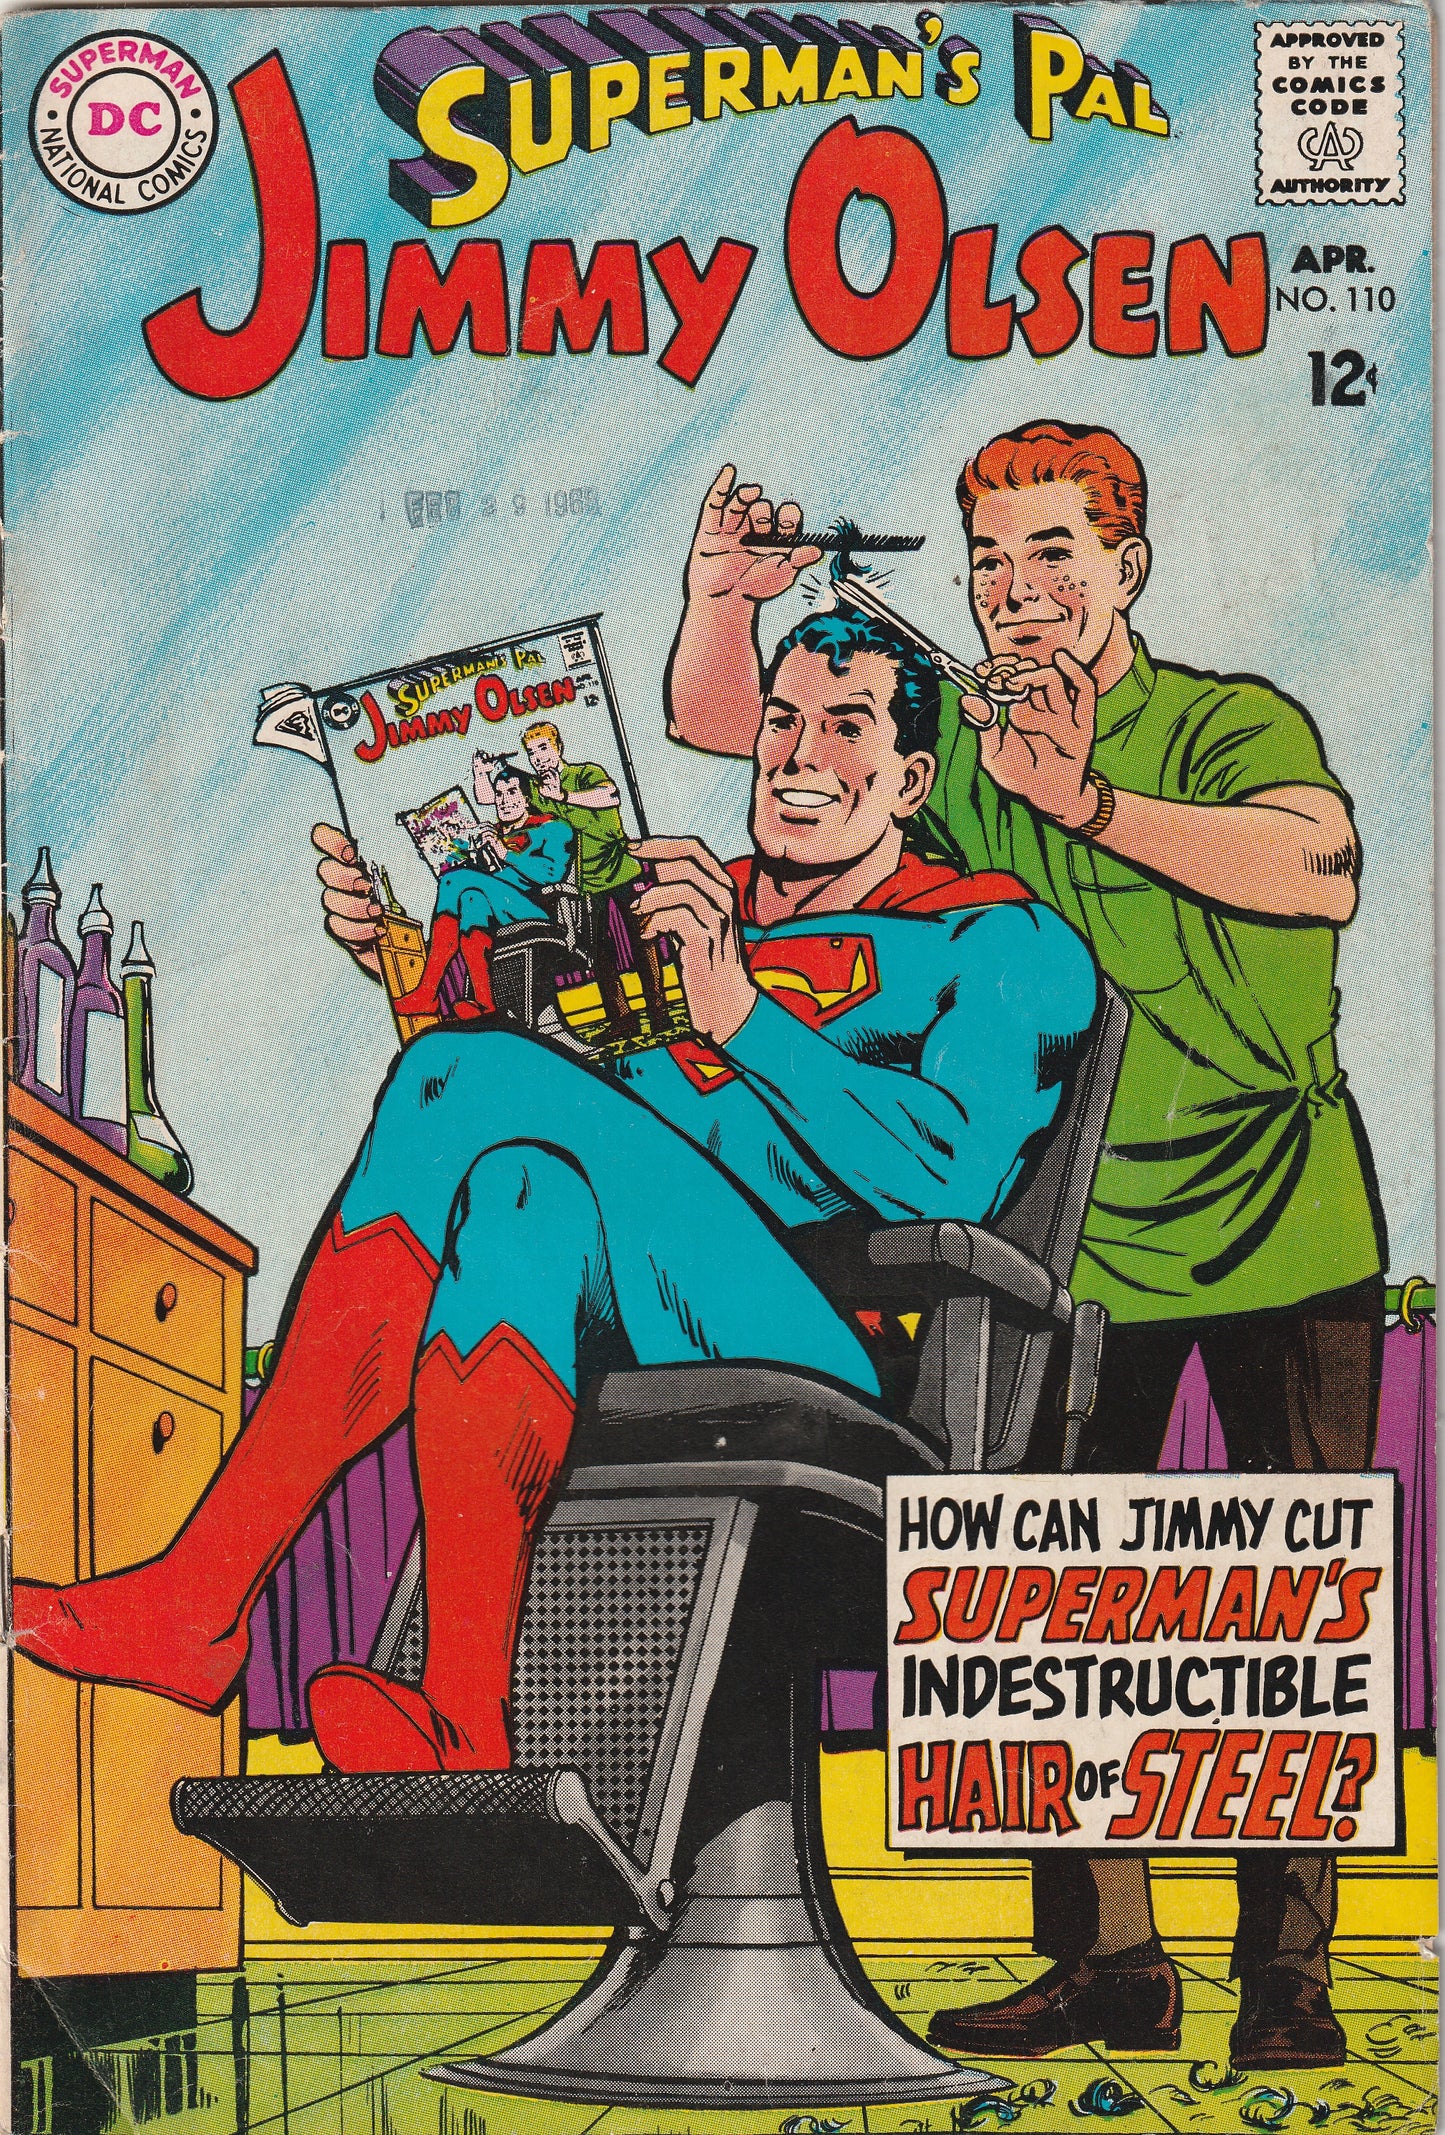 Superman's Pal, Jimmy Olsen #110 (1968) - Infinity cover